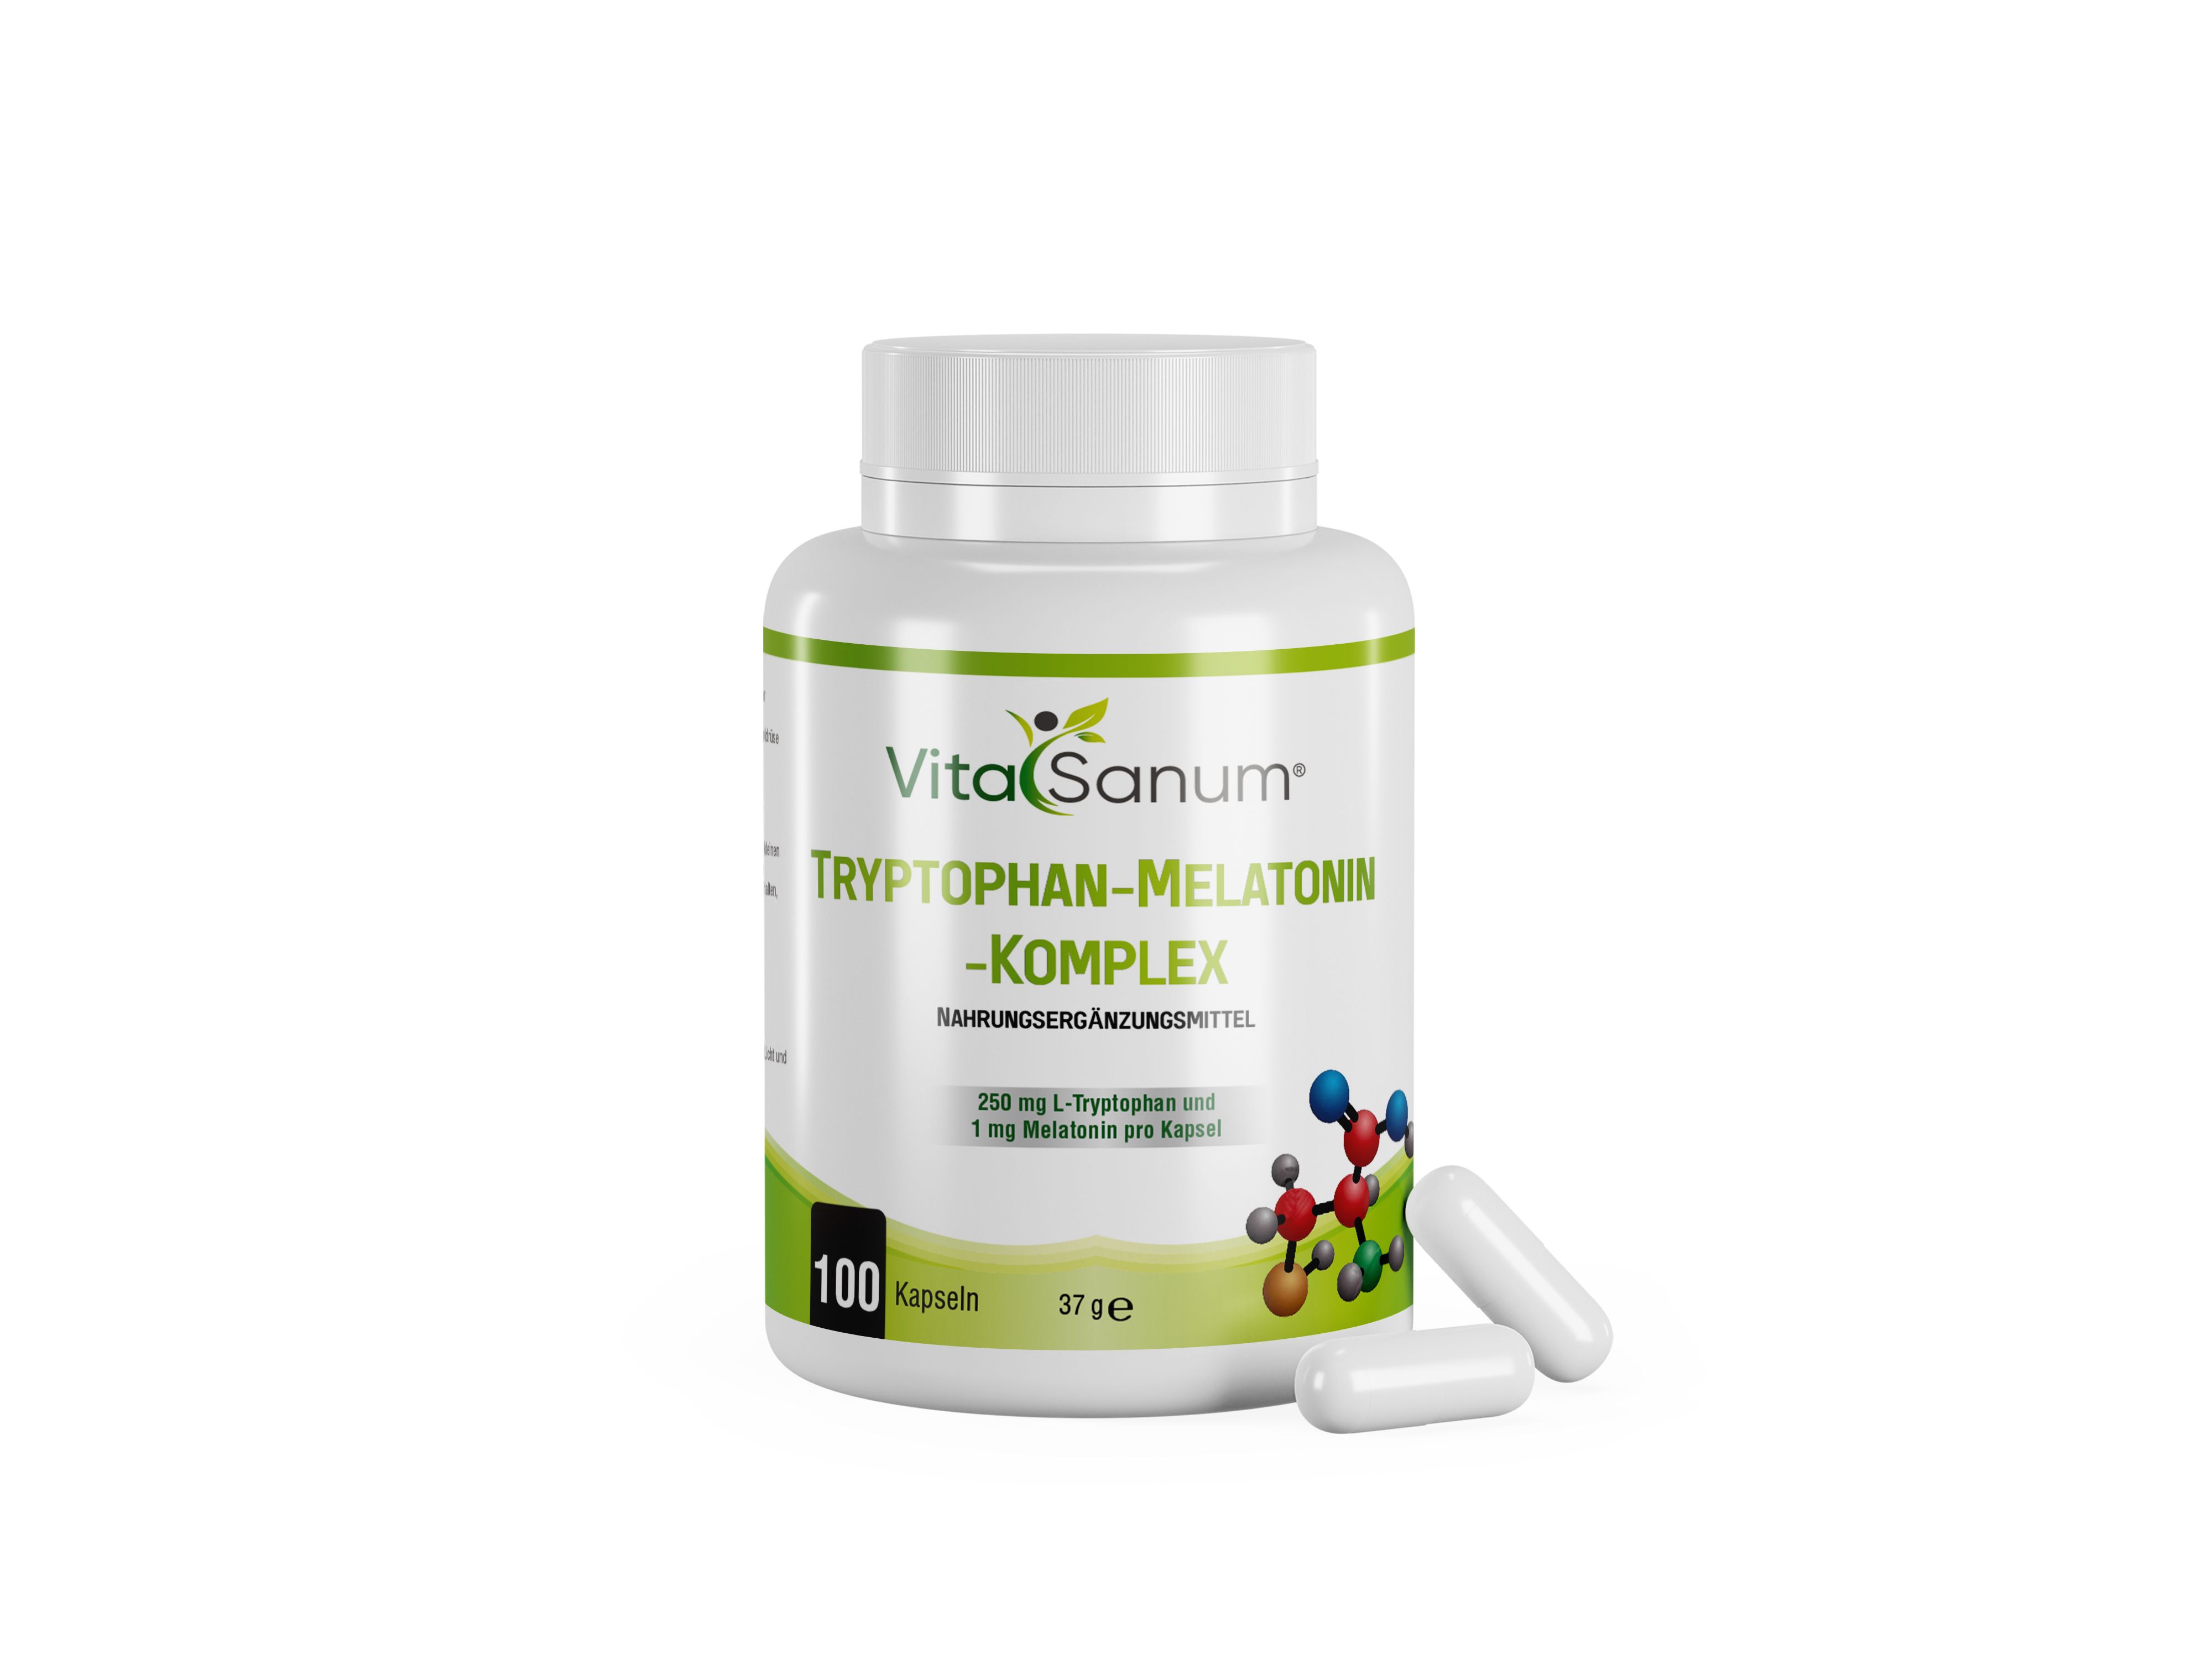 Vitasanum® Tryptophan-Melatonin complex